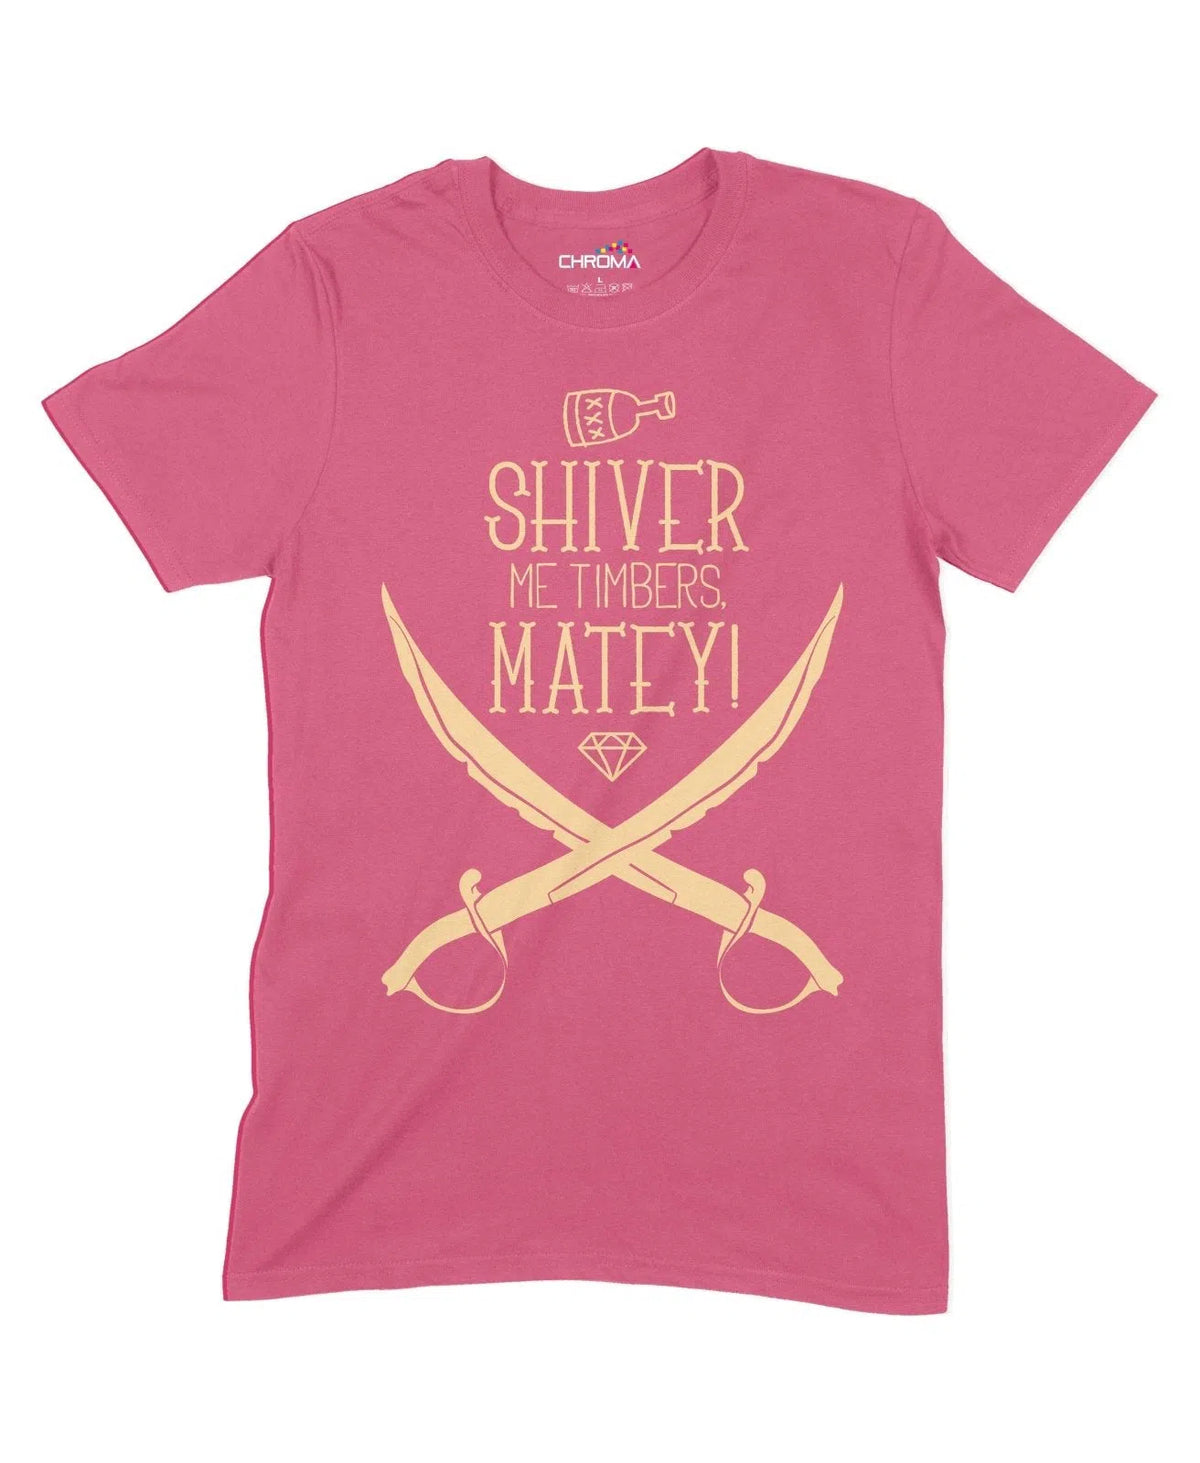 Shiver Me Timbers Matey Unisex Adult T-Shirt Chroma Clothing